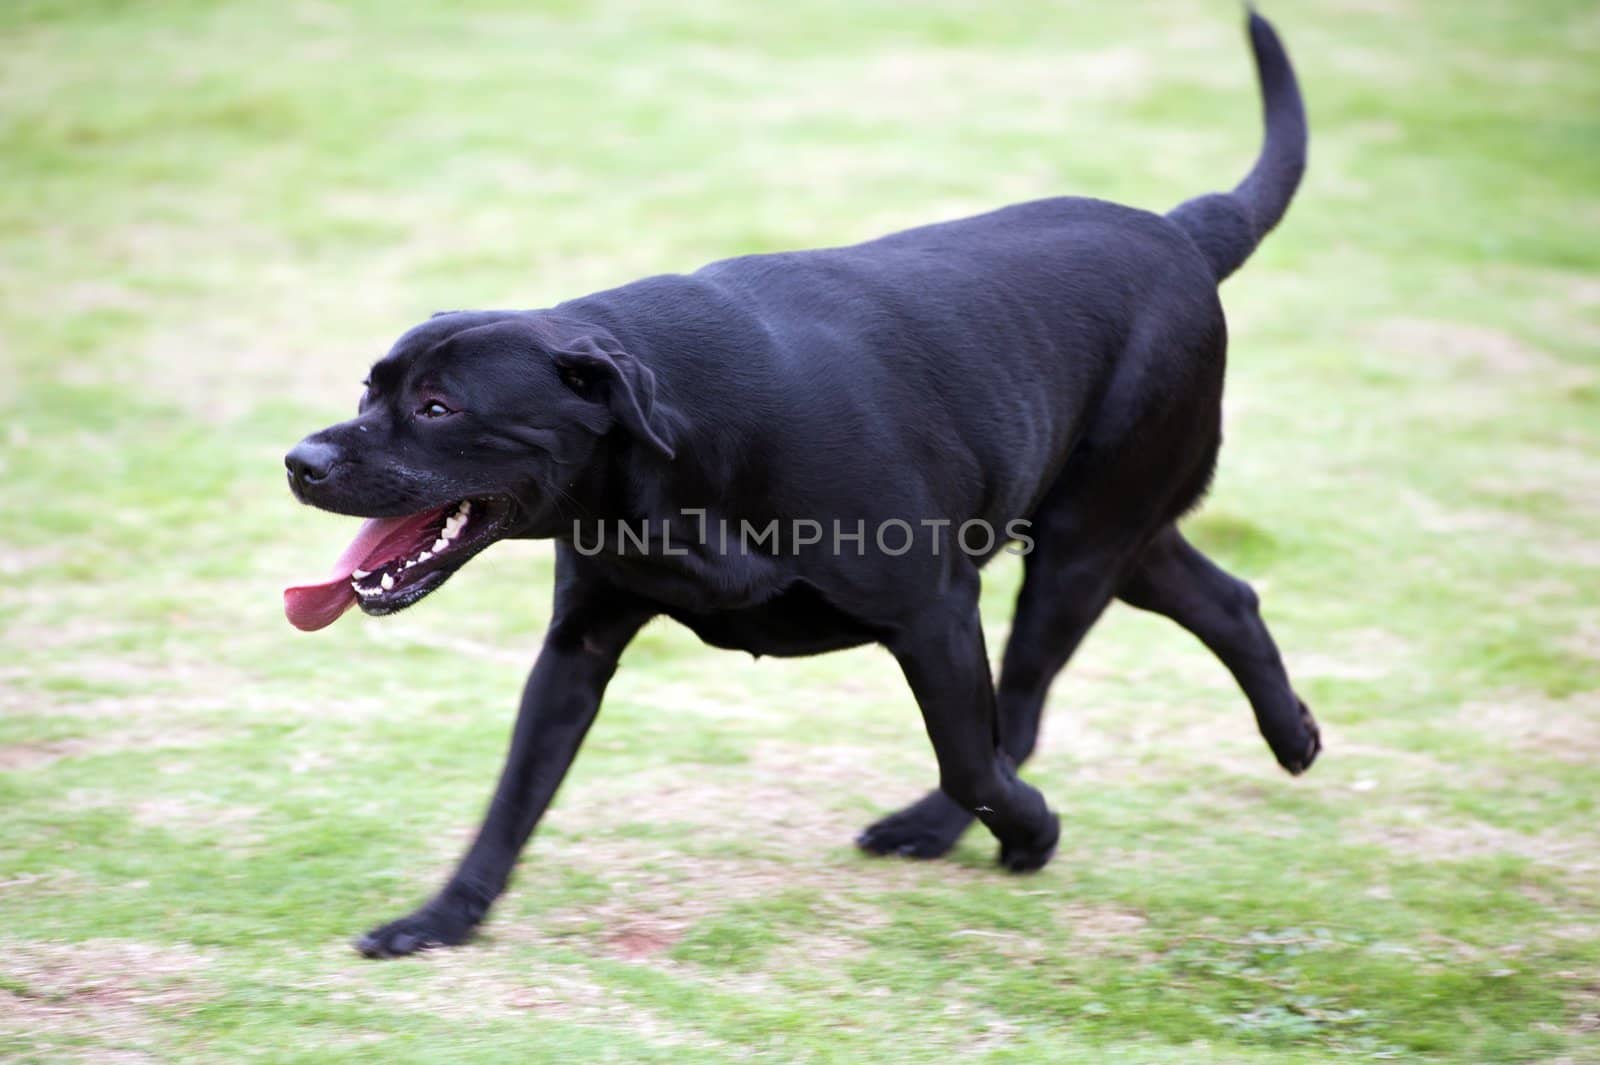 Labrador dog running on the lawn